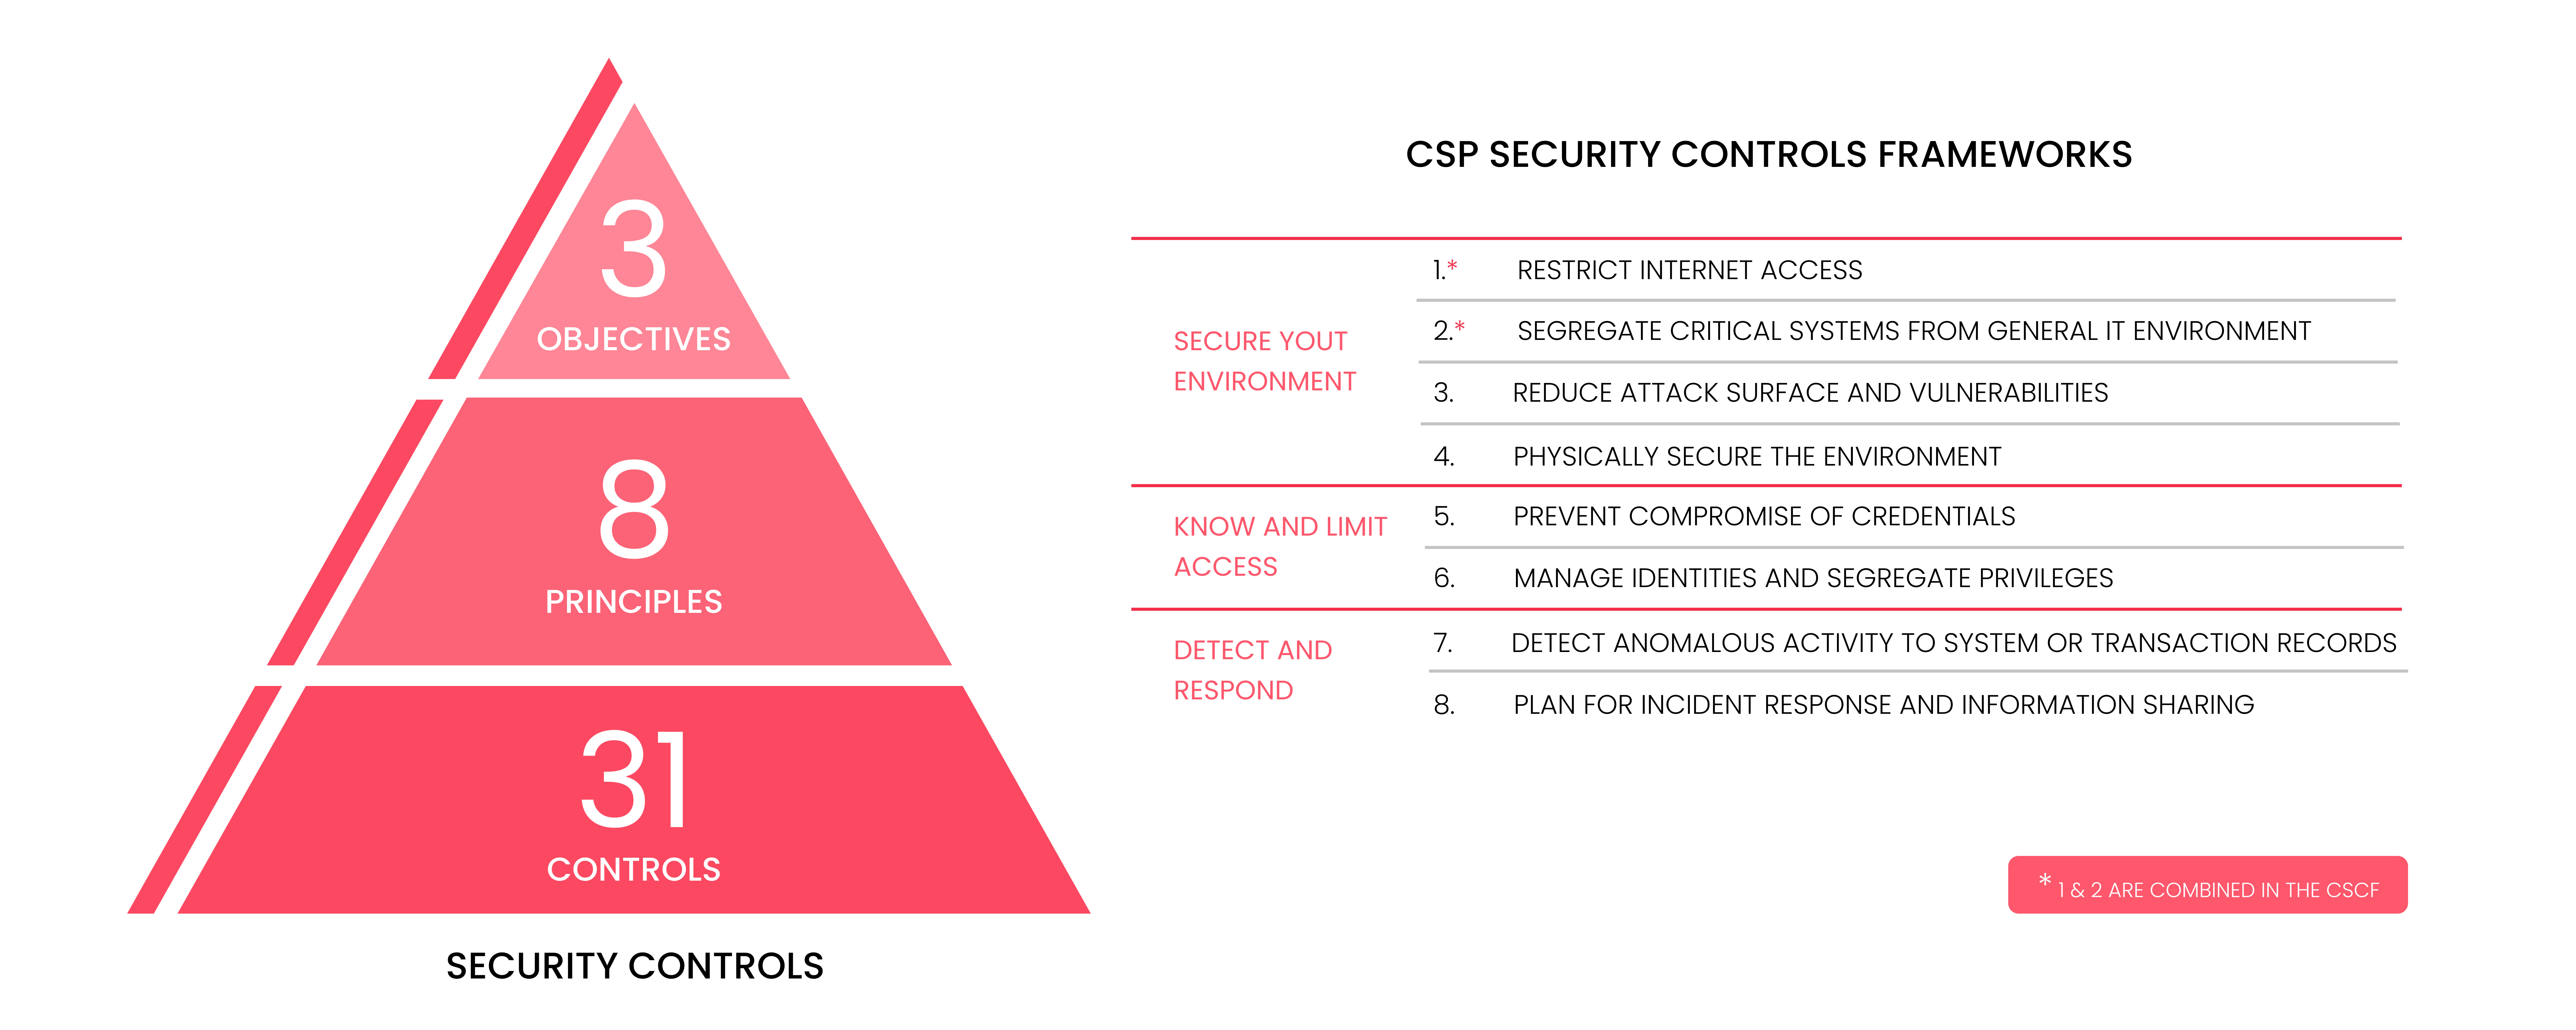 Figure 1: Control Security Frameworks